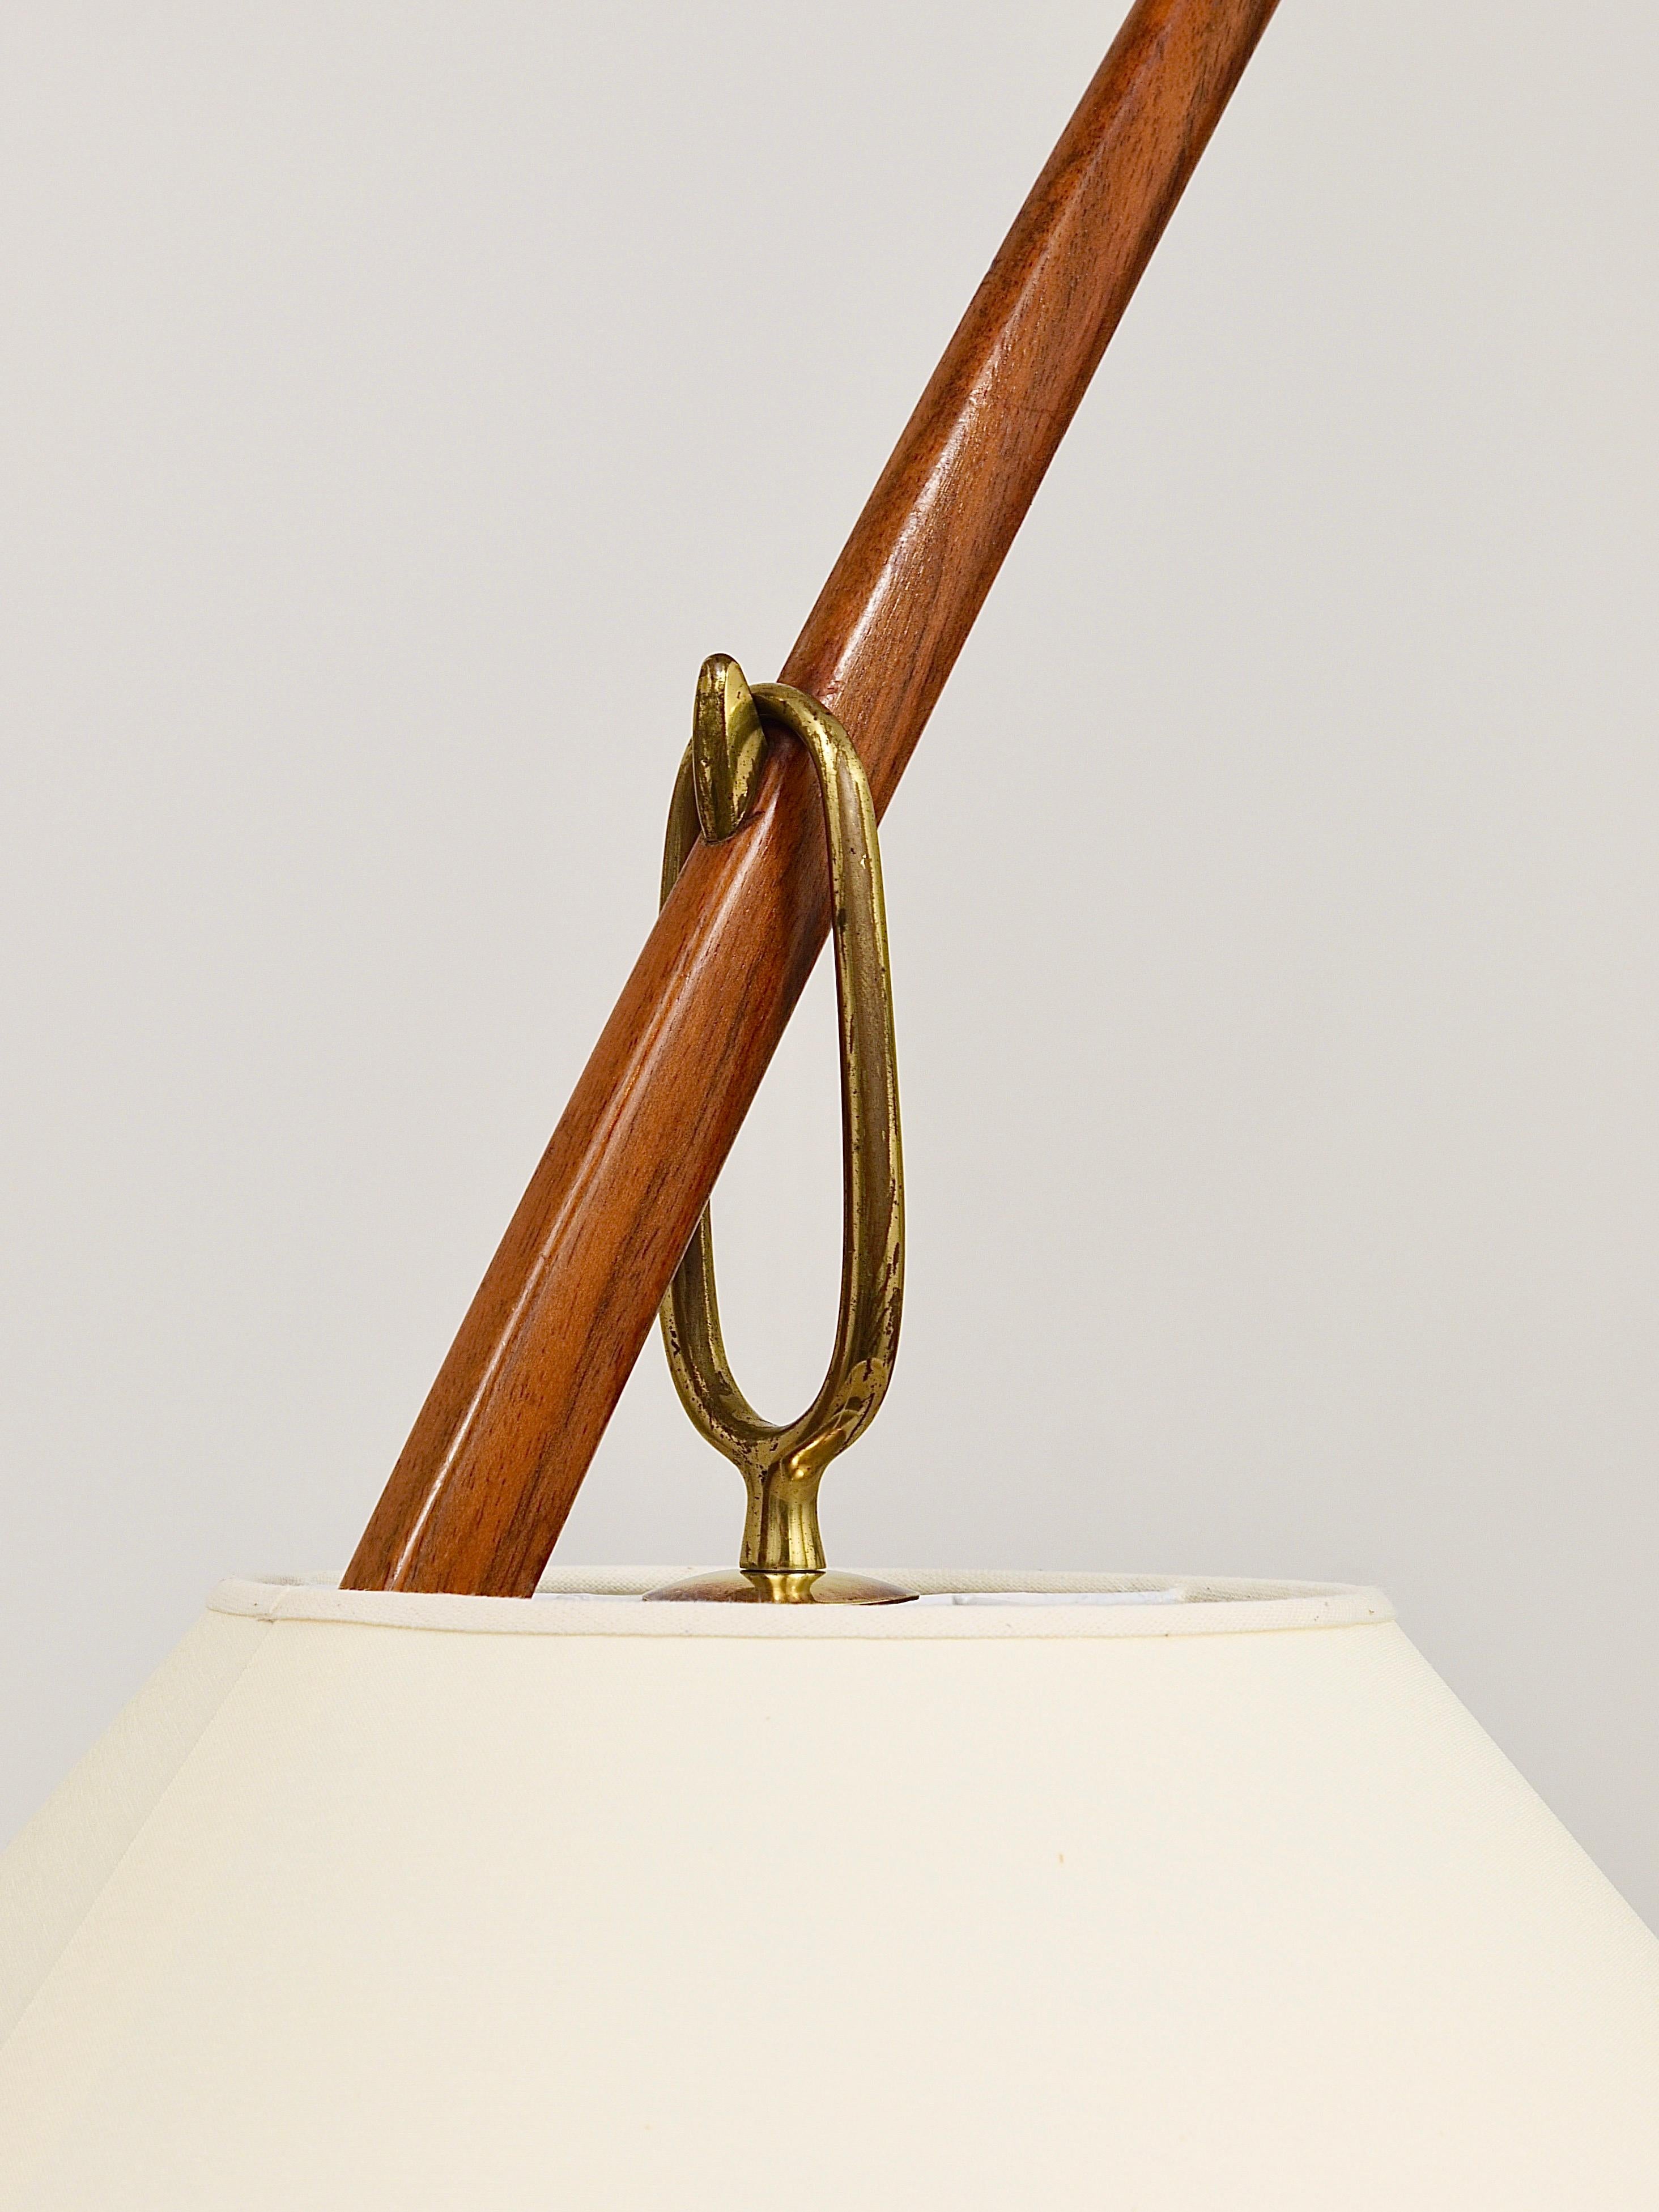 J.T. Kalmar 2x Dornstab Adjustable Floor Lamp, Brass, Walnut, Austria, 1950s For Sale 7